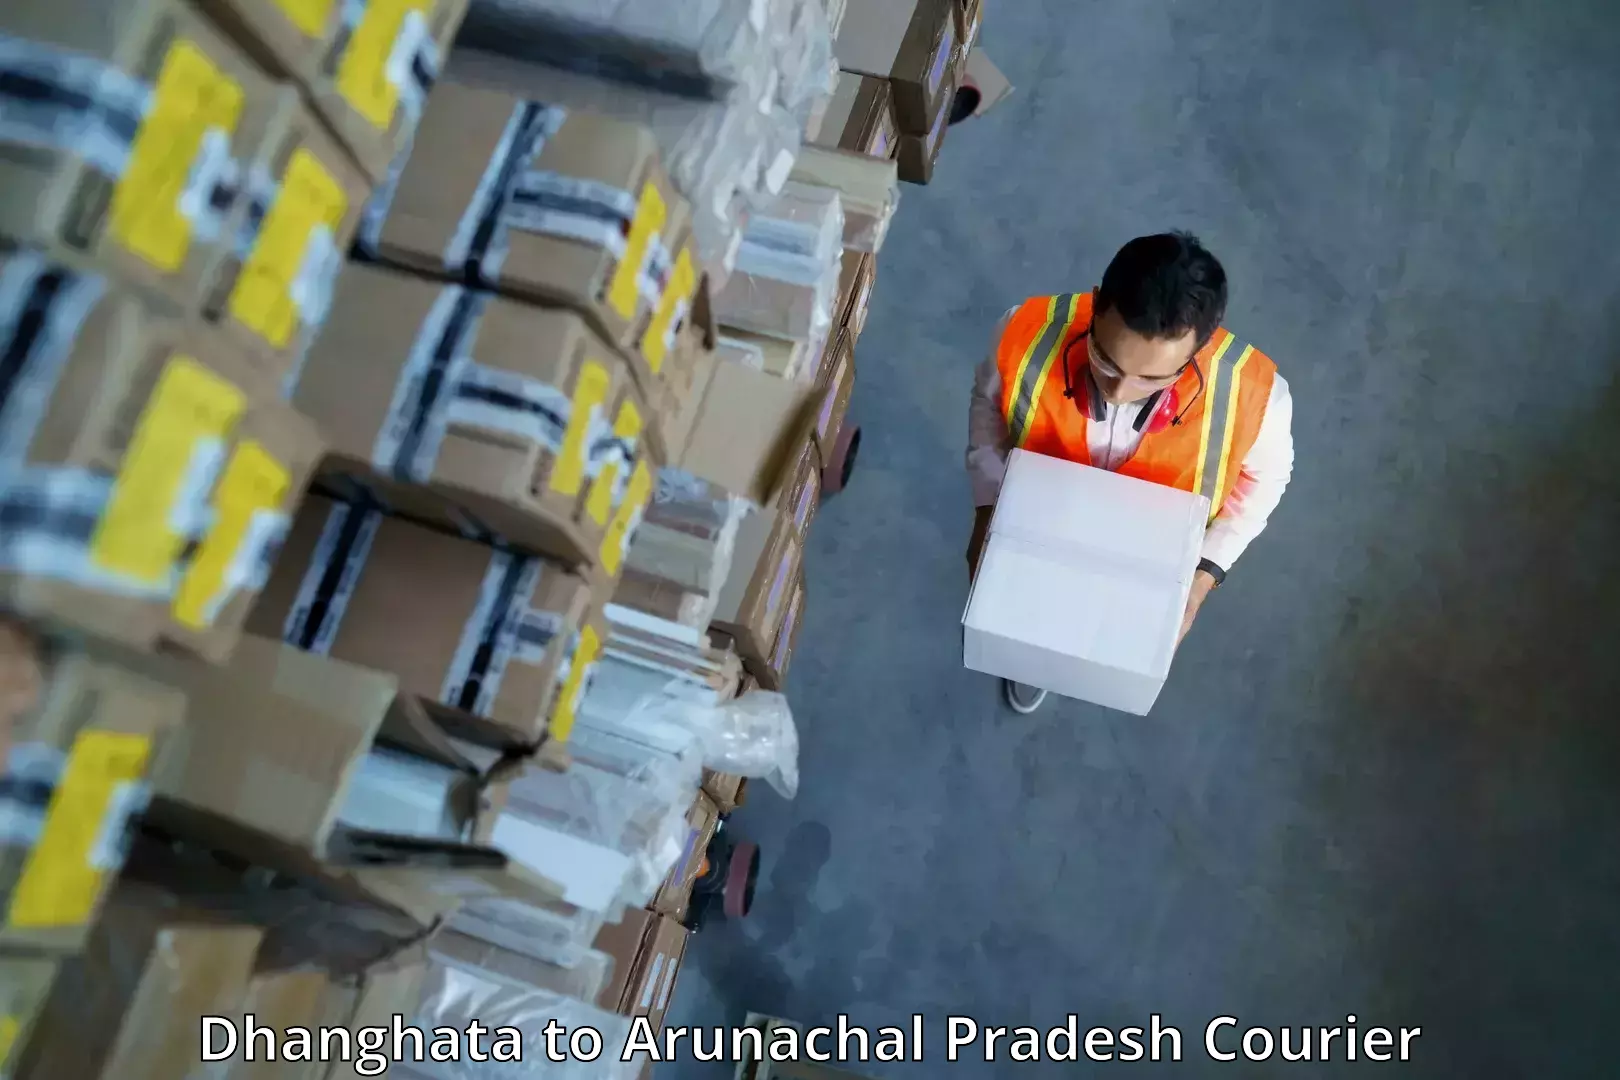 Customer-centric shipping in Dhanghata to Lower Subansiri